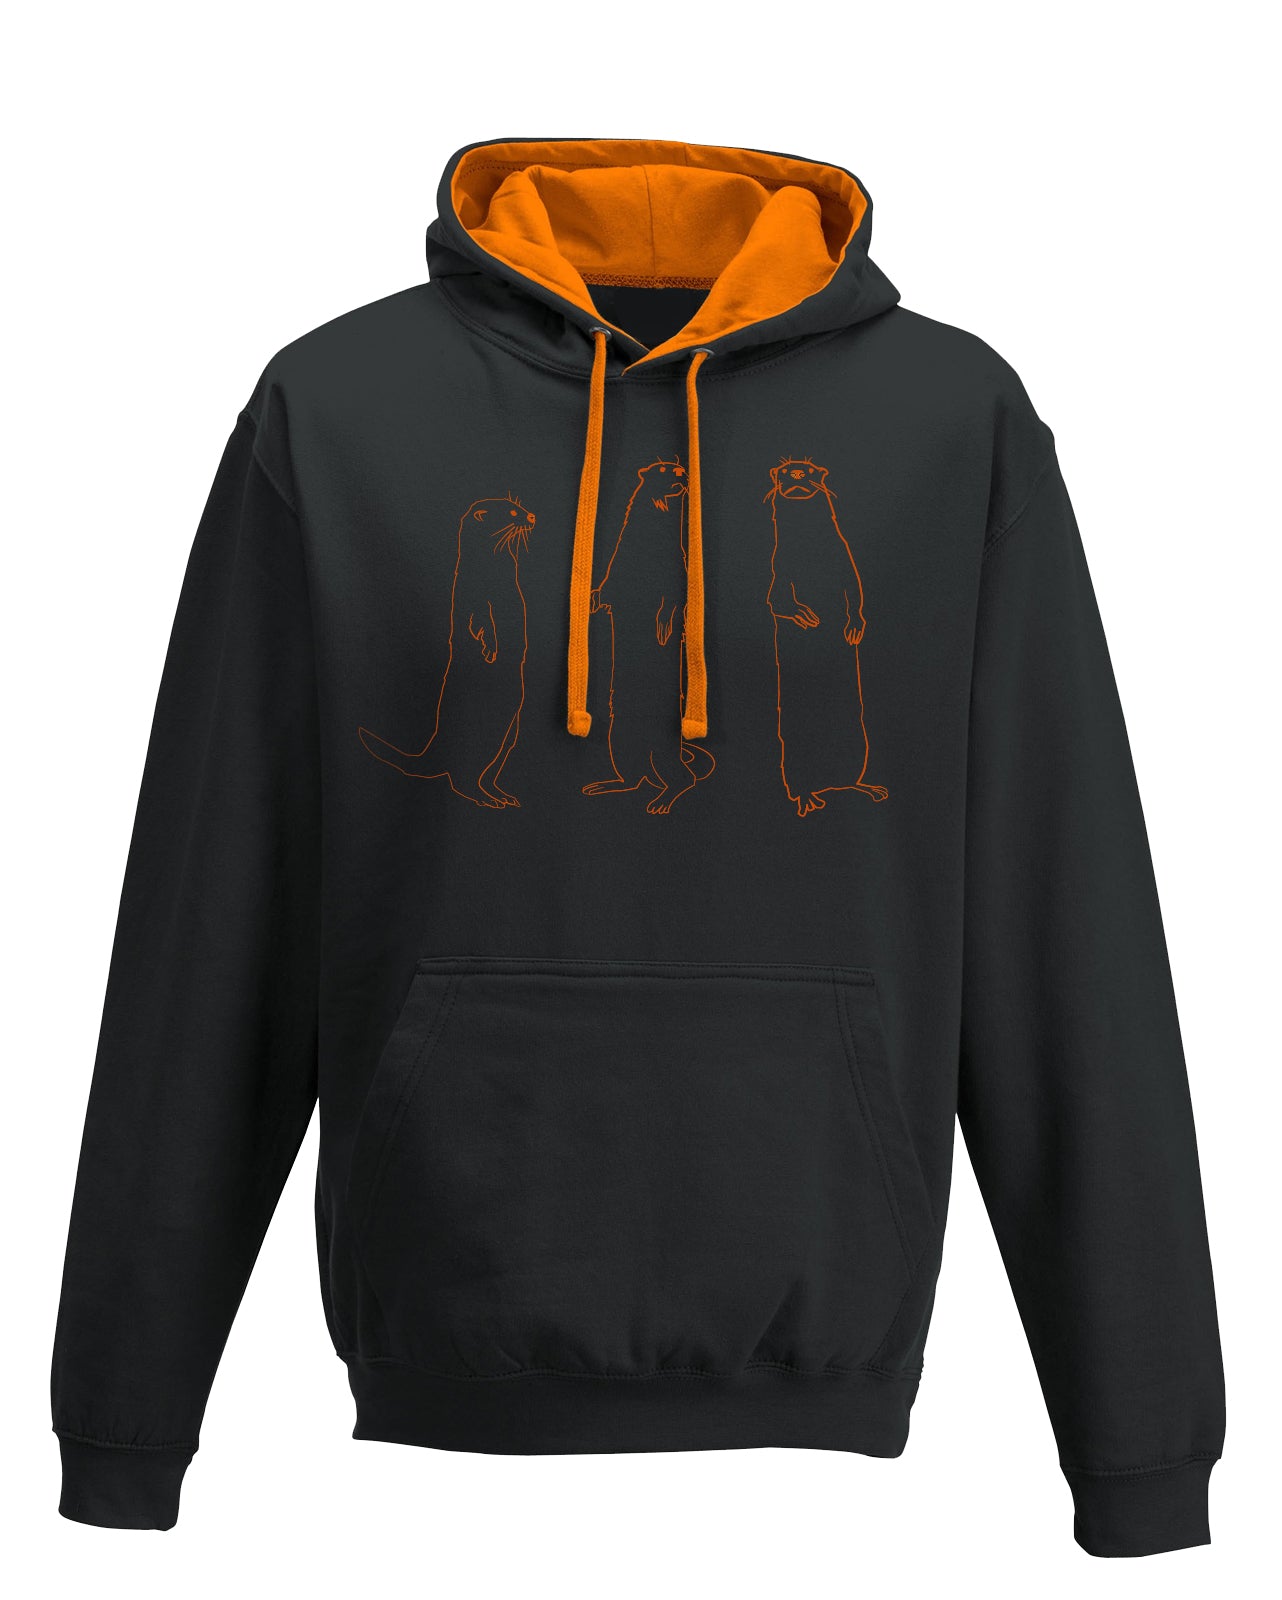 Otters unisex hoodie